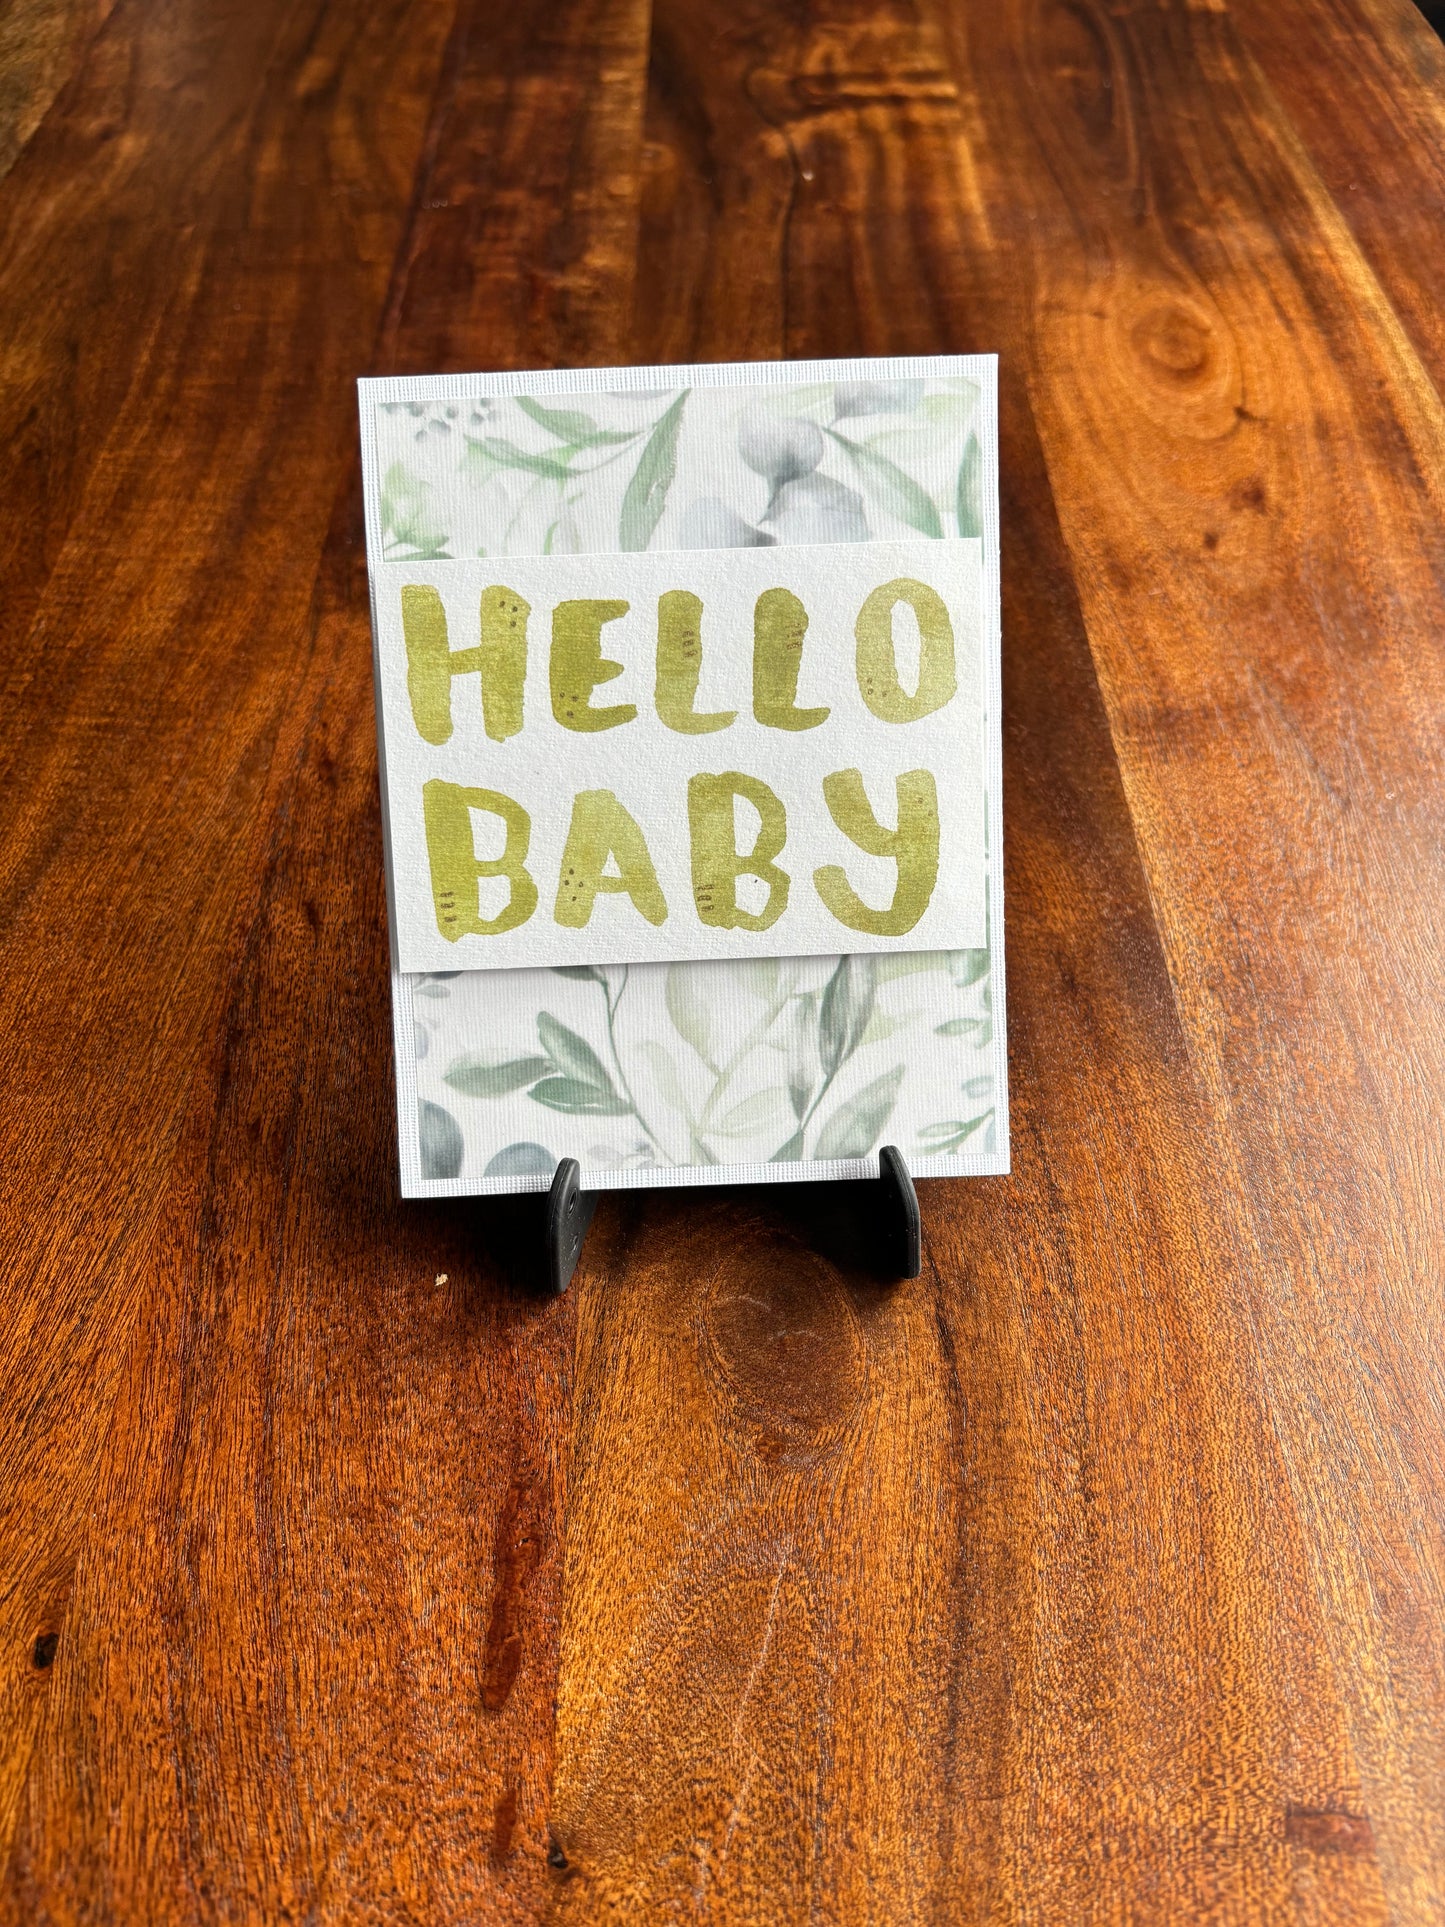 "Hello Baby" Greeting Card